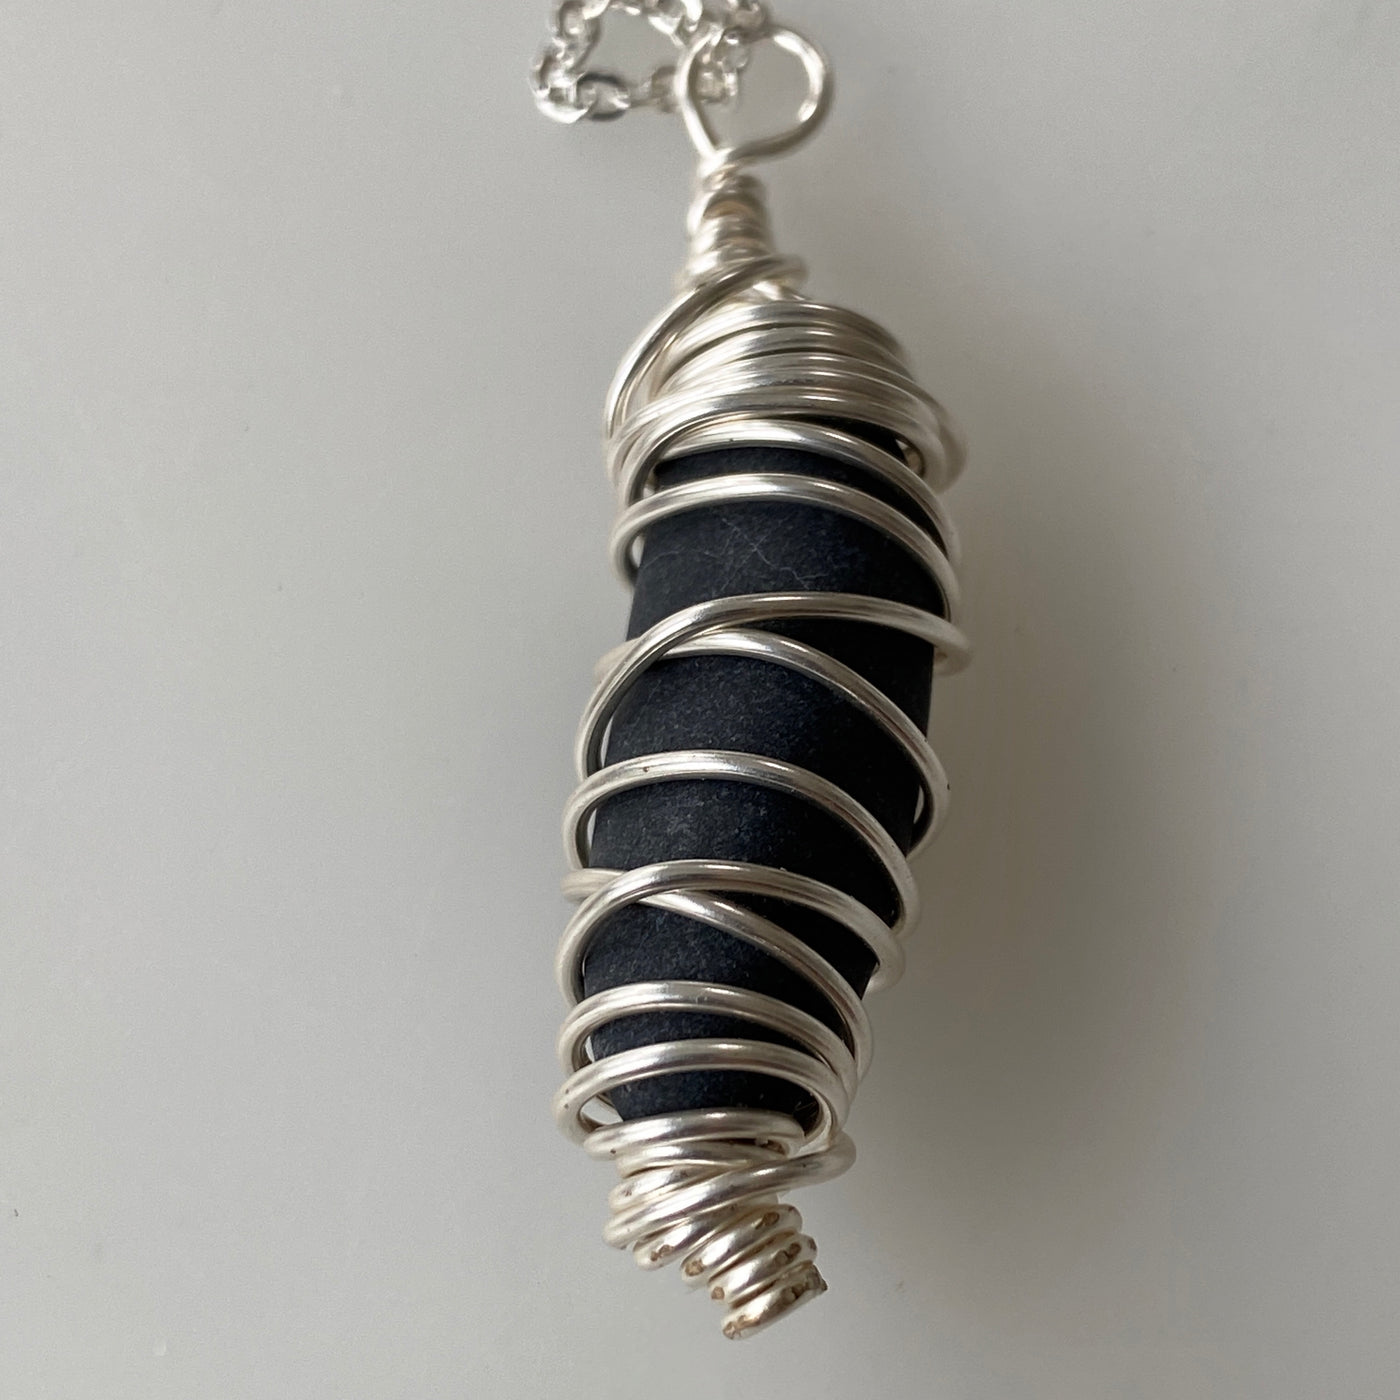 Small black natural stone and silver wire pendant.